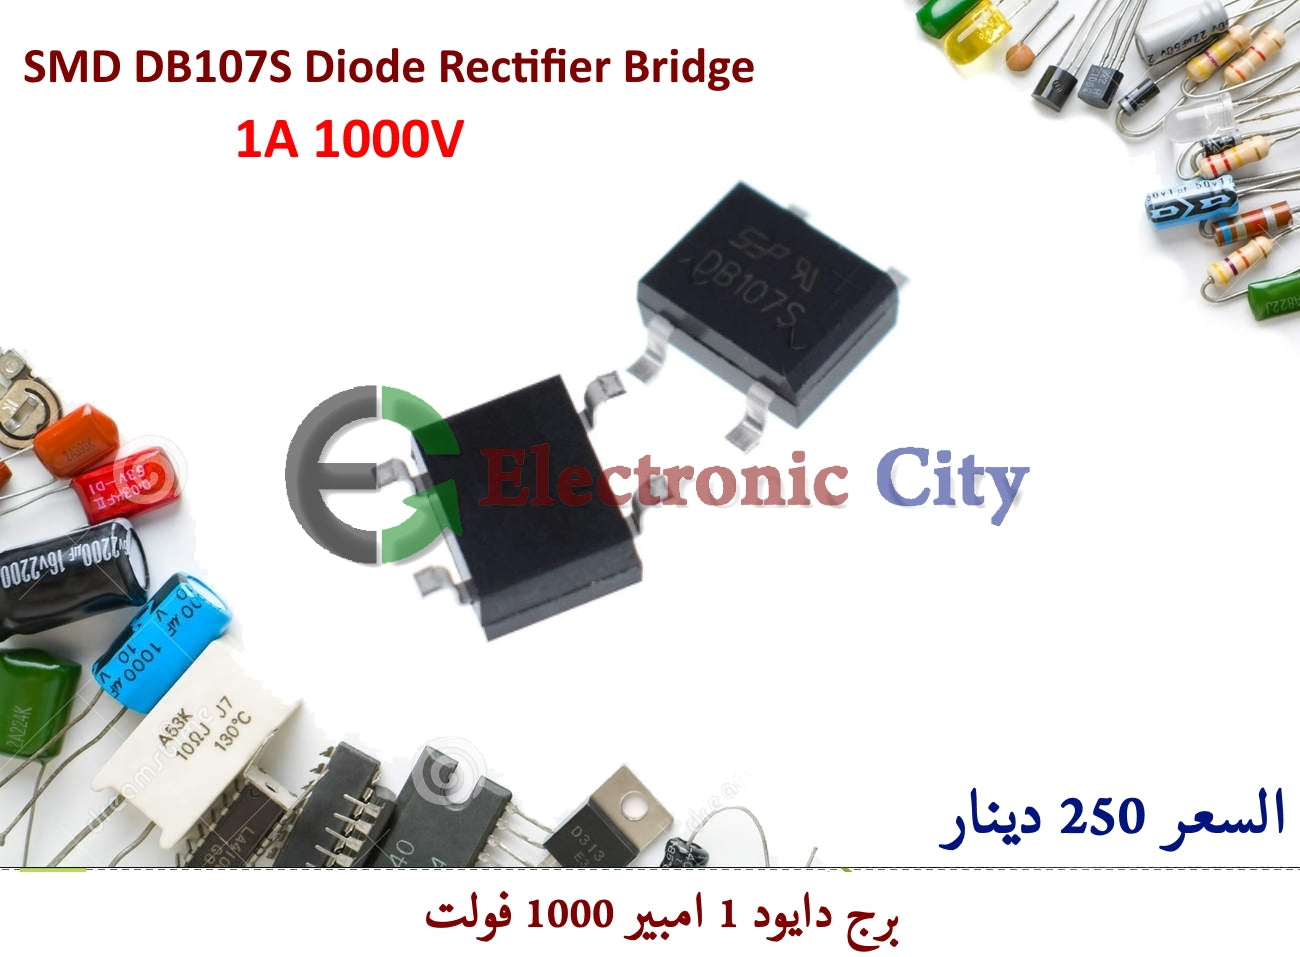 SMD DB107S 1A 1000V Diode Rectifier Bridge